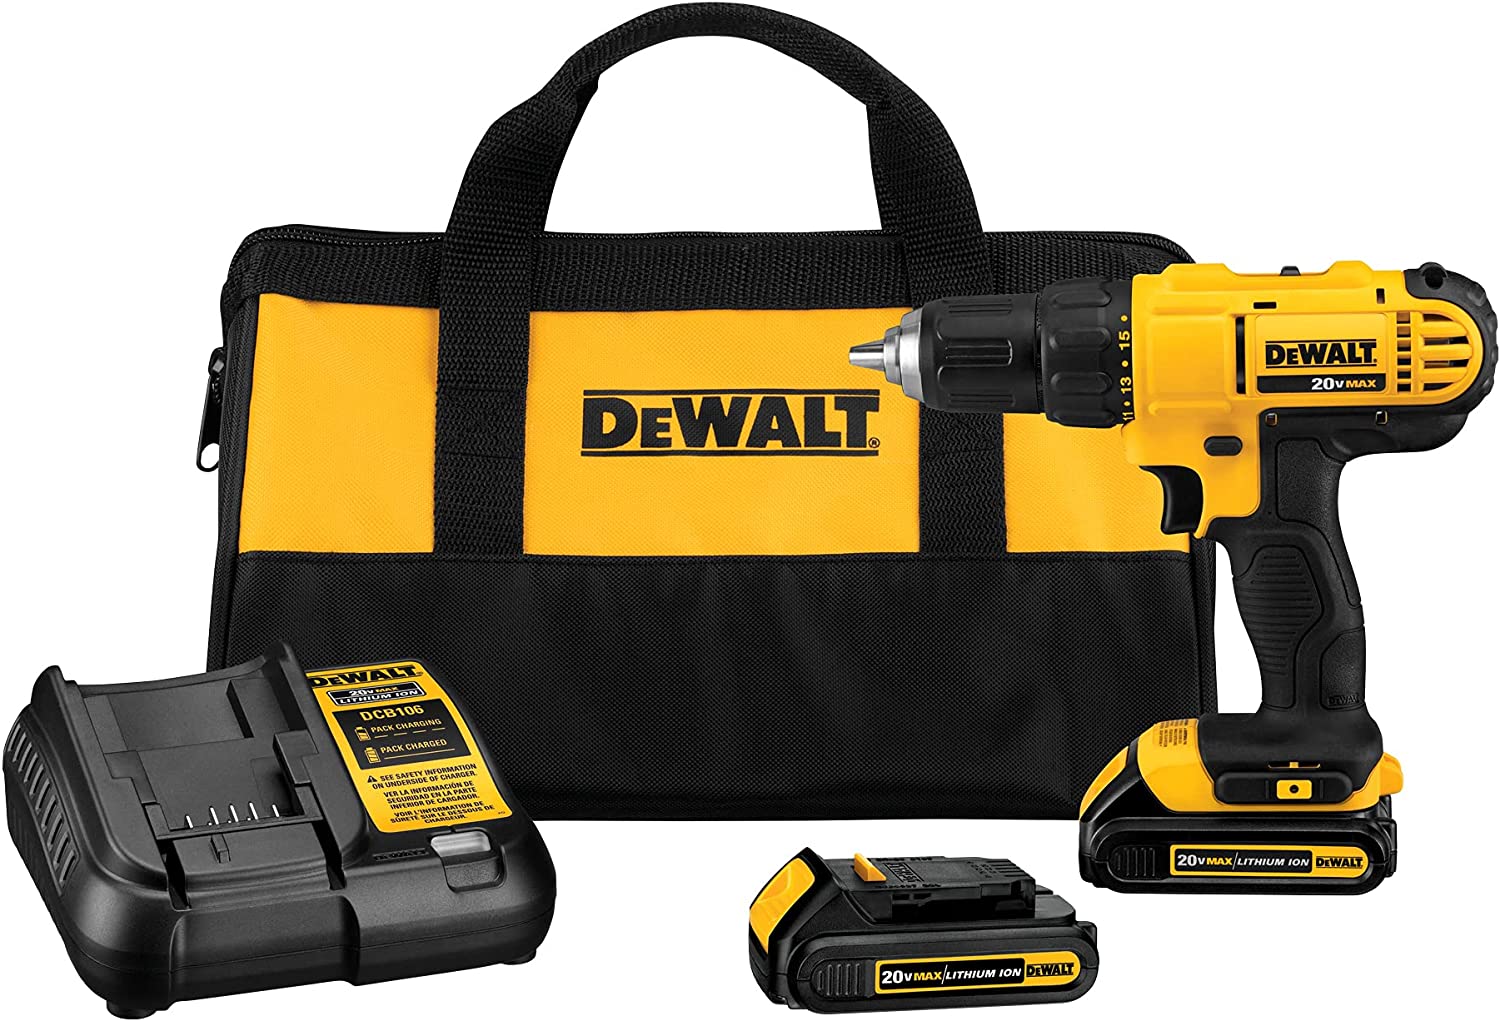 DEWALT 20V Max Cordless 1/2" Drill/Driver Kit w/ 2-Ct 20V Batteries, Charger & Bag $80 + Free Shipping